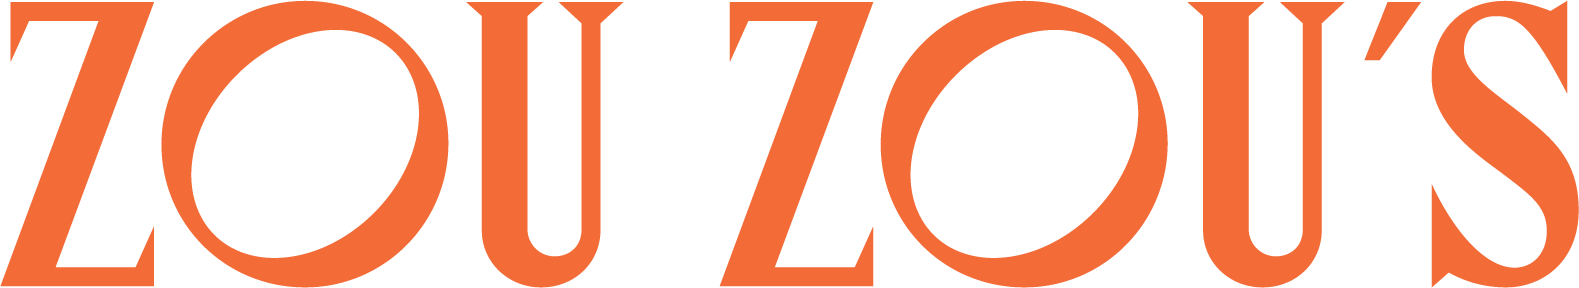 Zou Zou's a neighborhood of ESRT's property located at 1350 Broadway New York